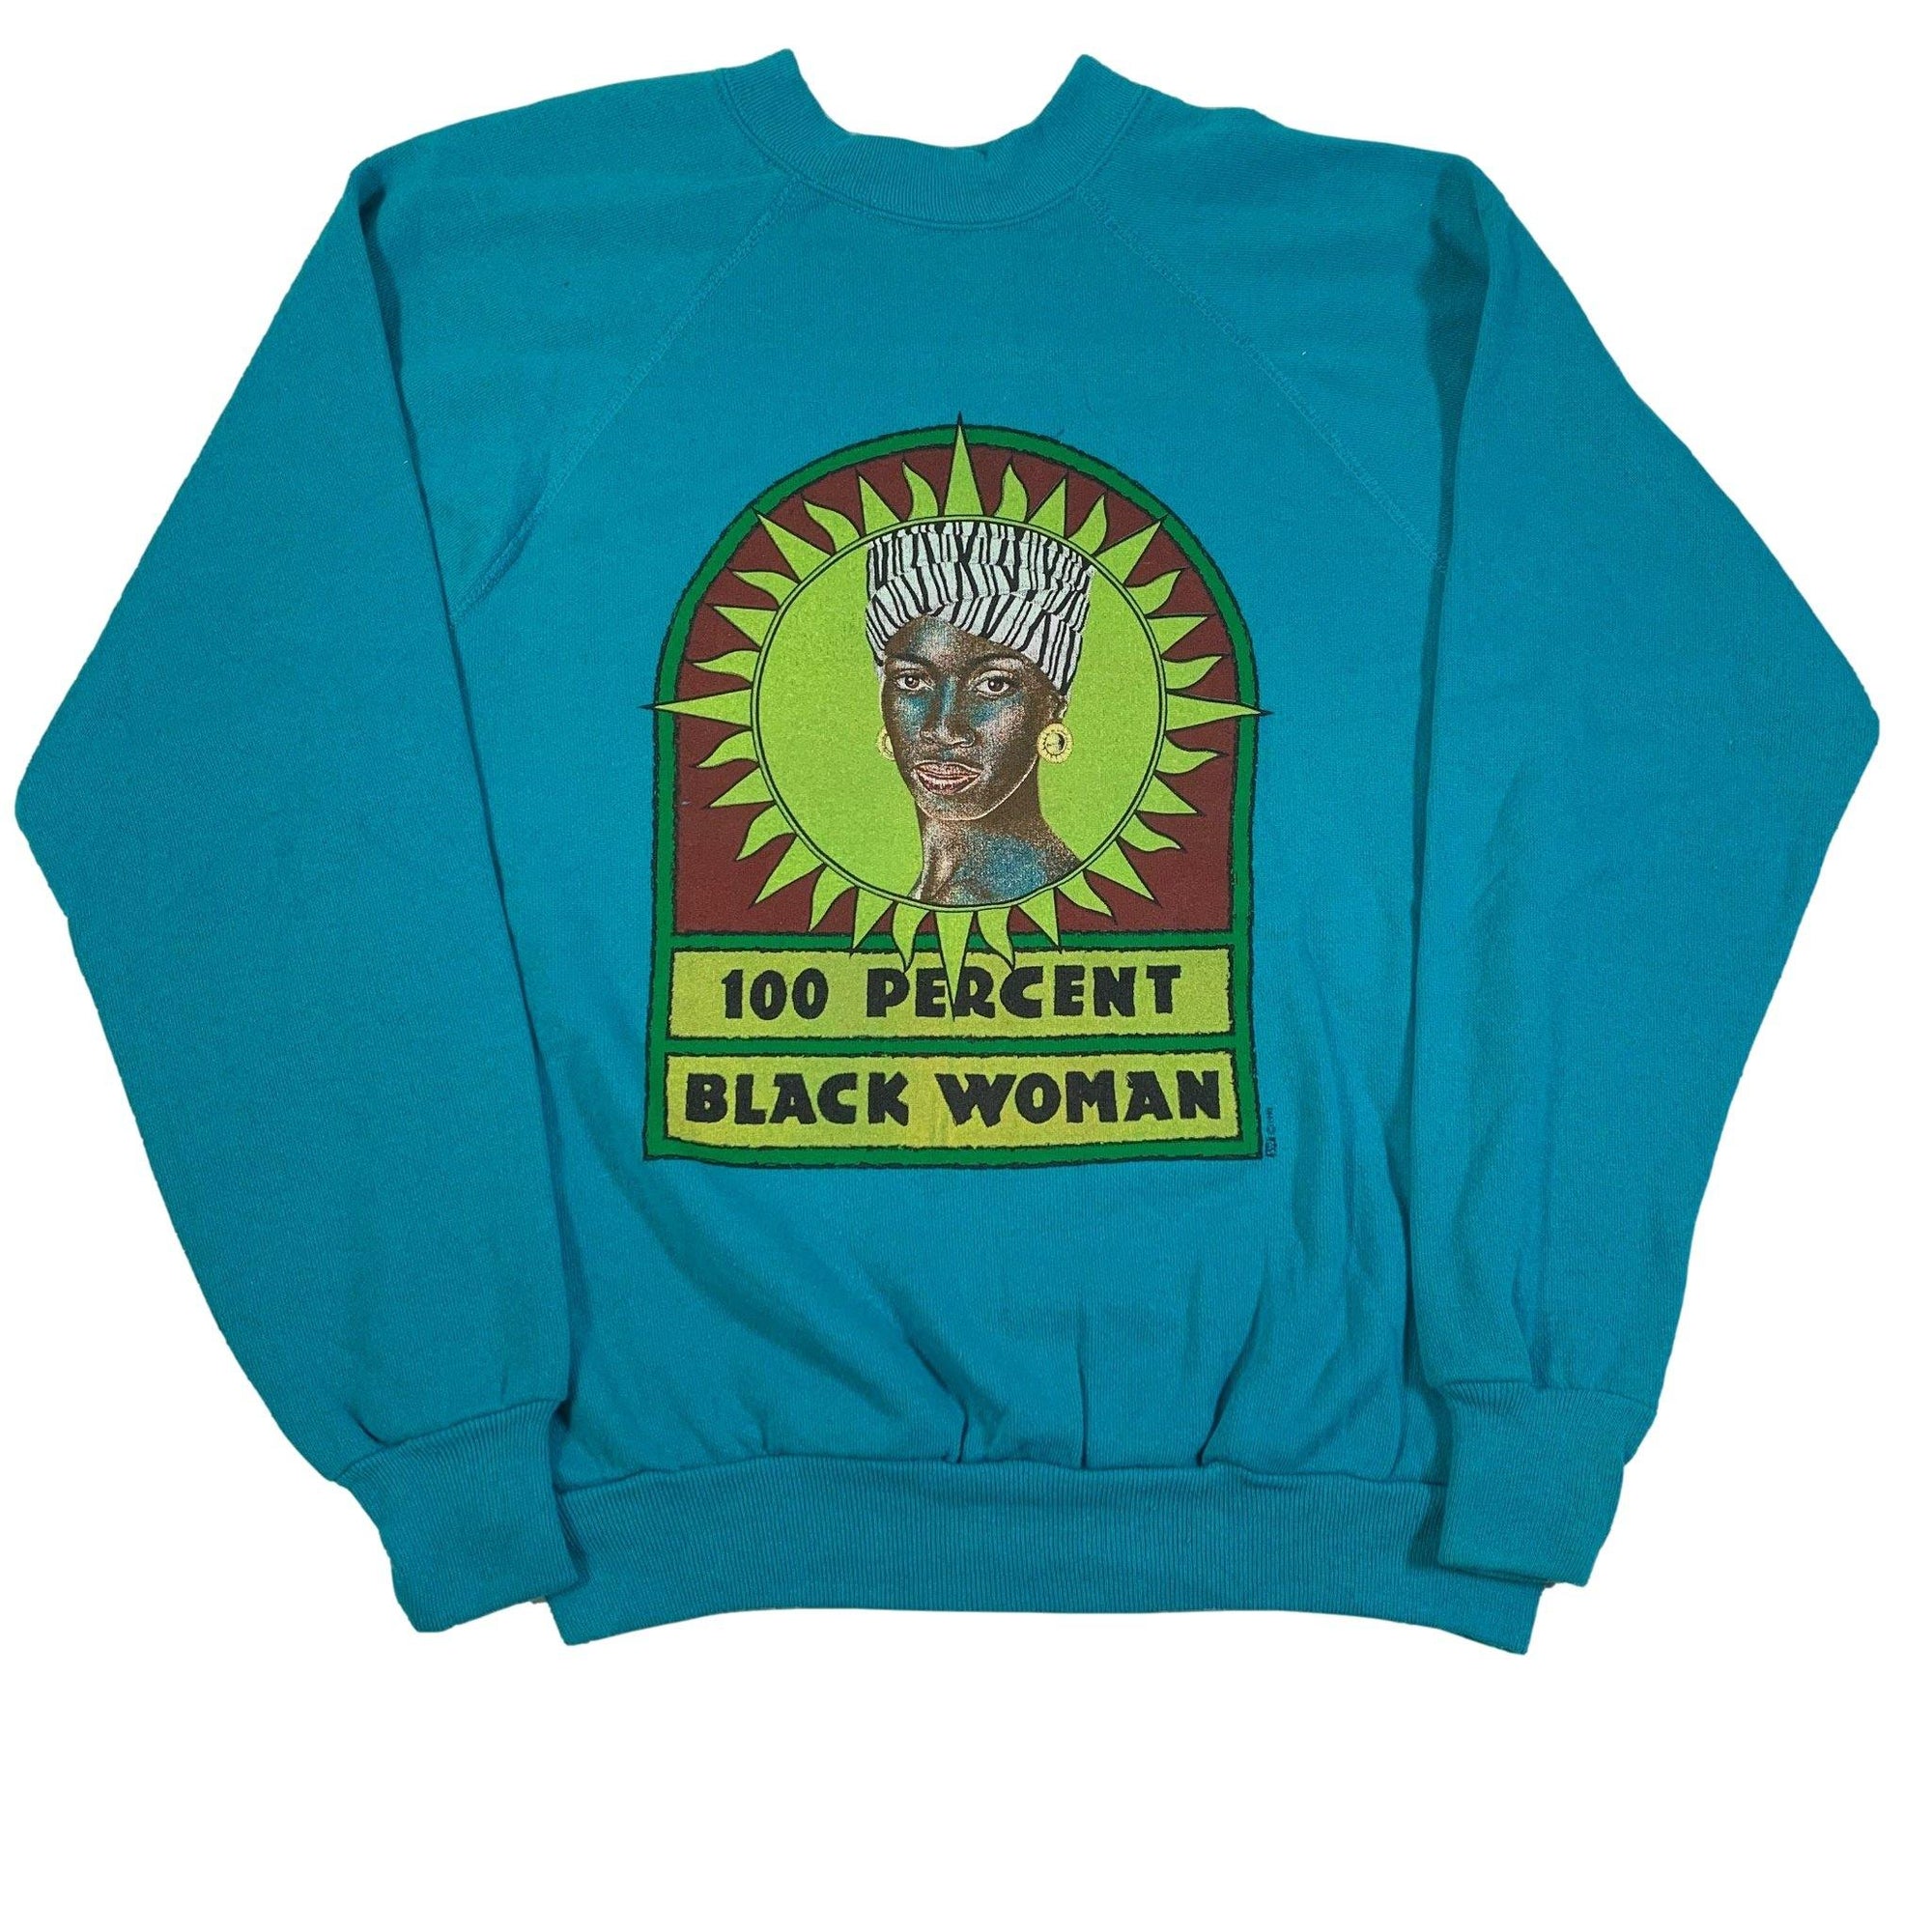 Vintage original 100 percent Black Woman crewneck sweatshirt